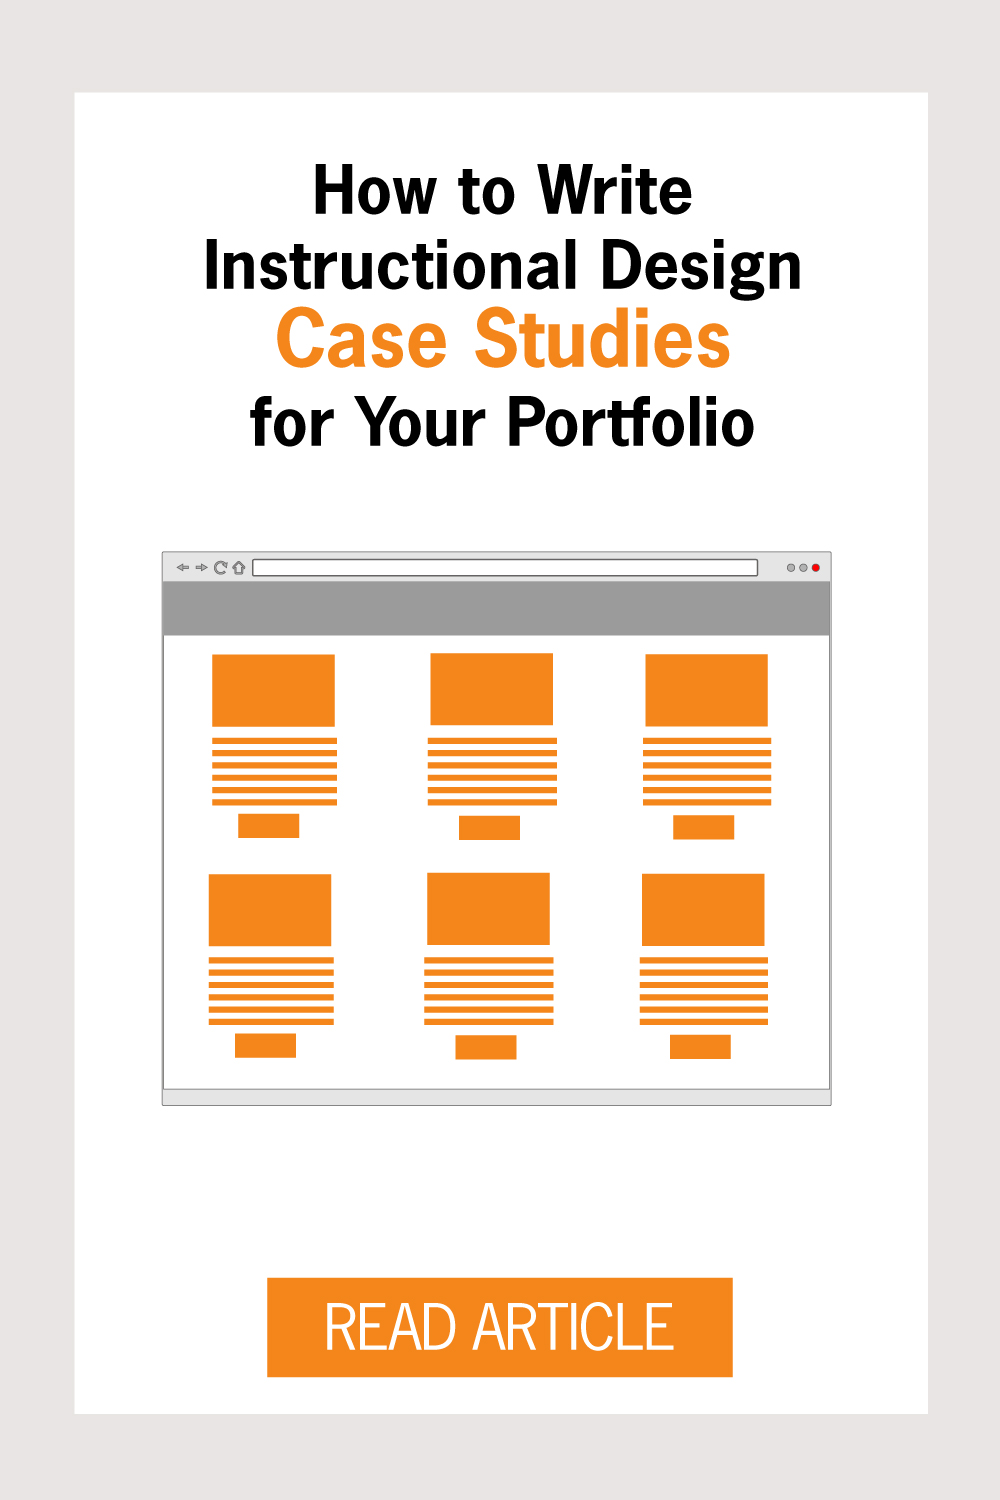 How to Write Instructional Design Case Studies for Your Portfolio